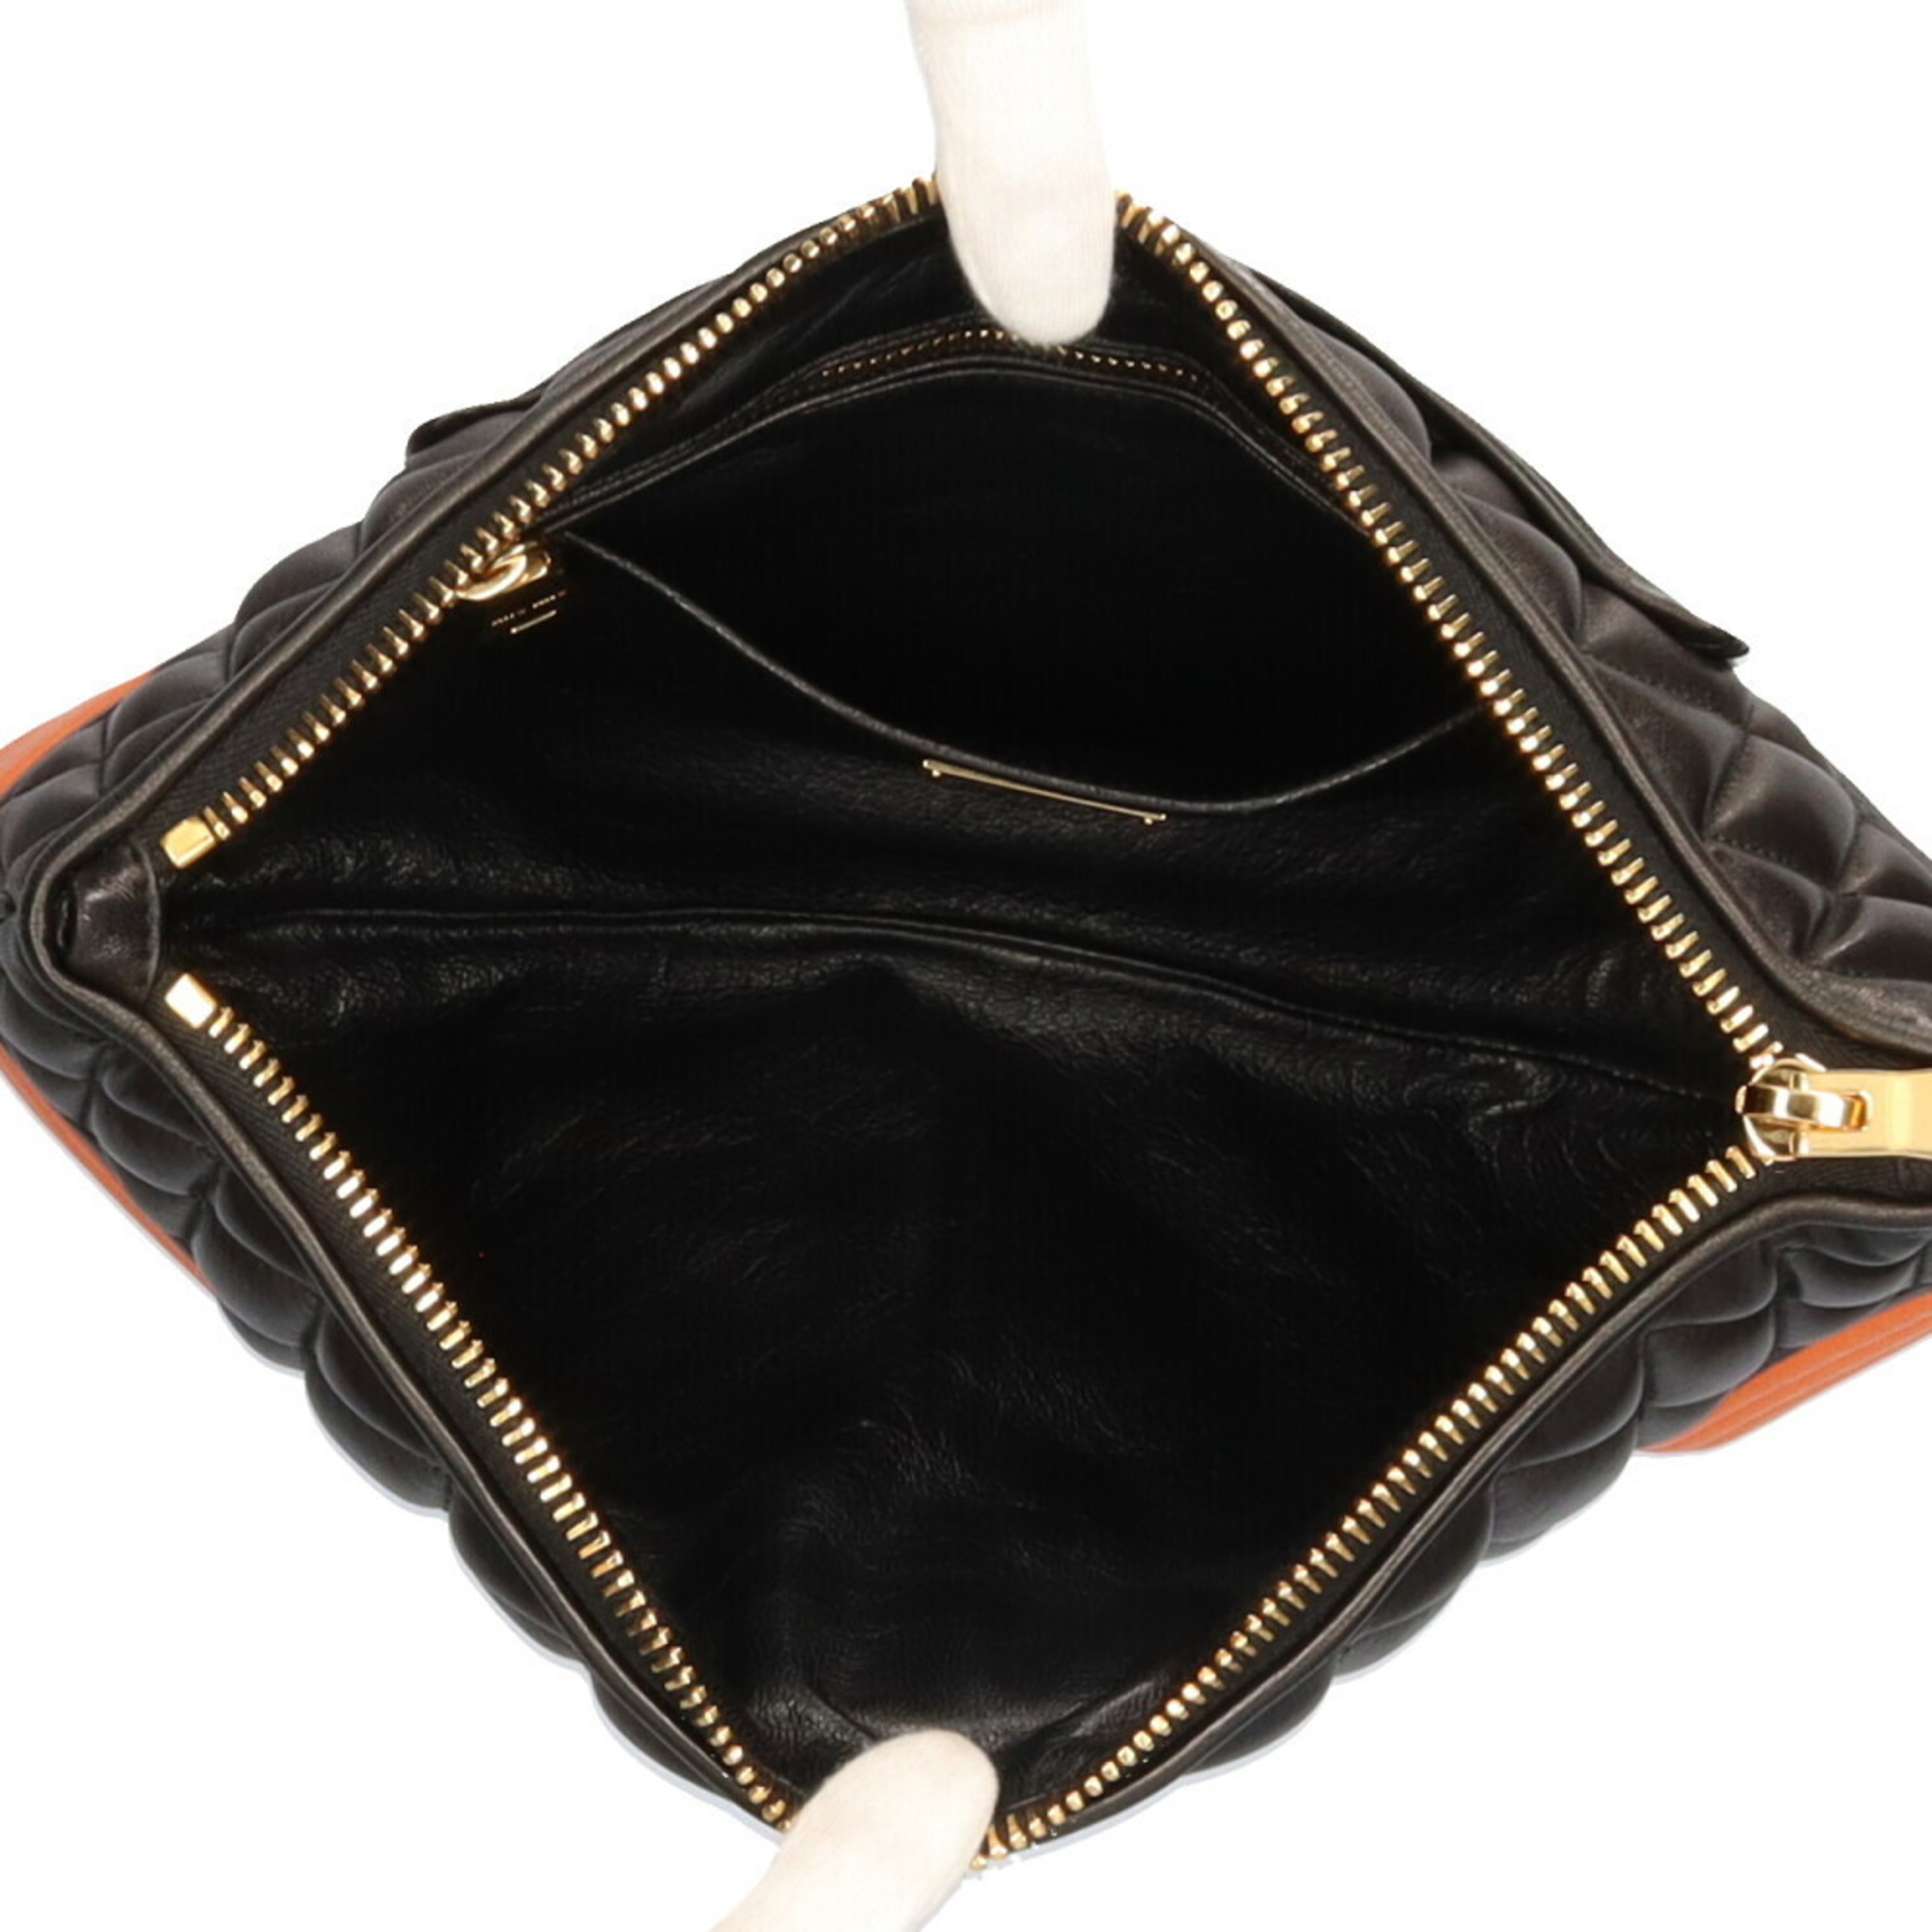 Miu MIUMIU clutch bag leather black ladies